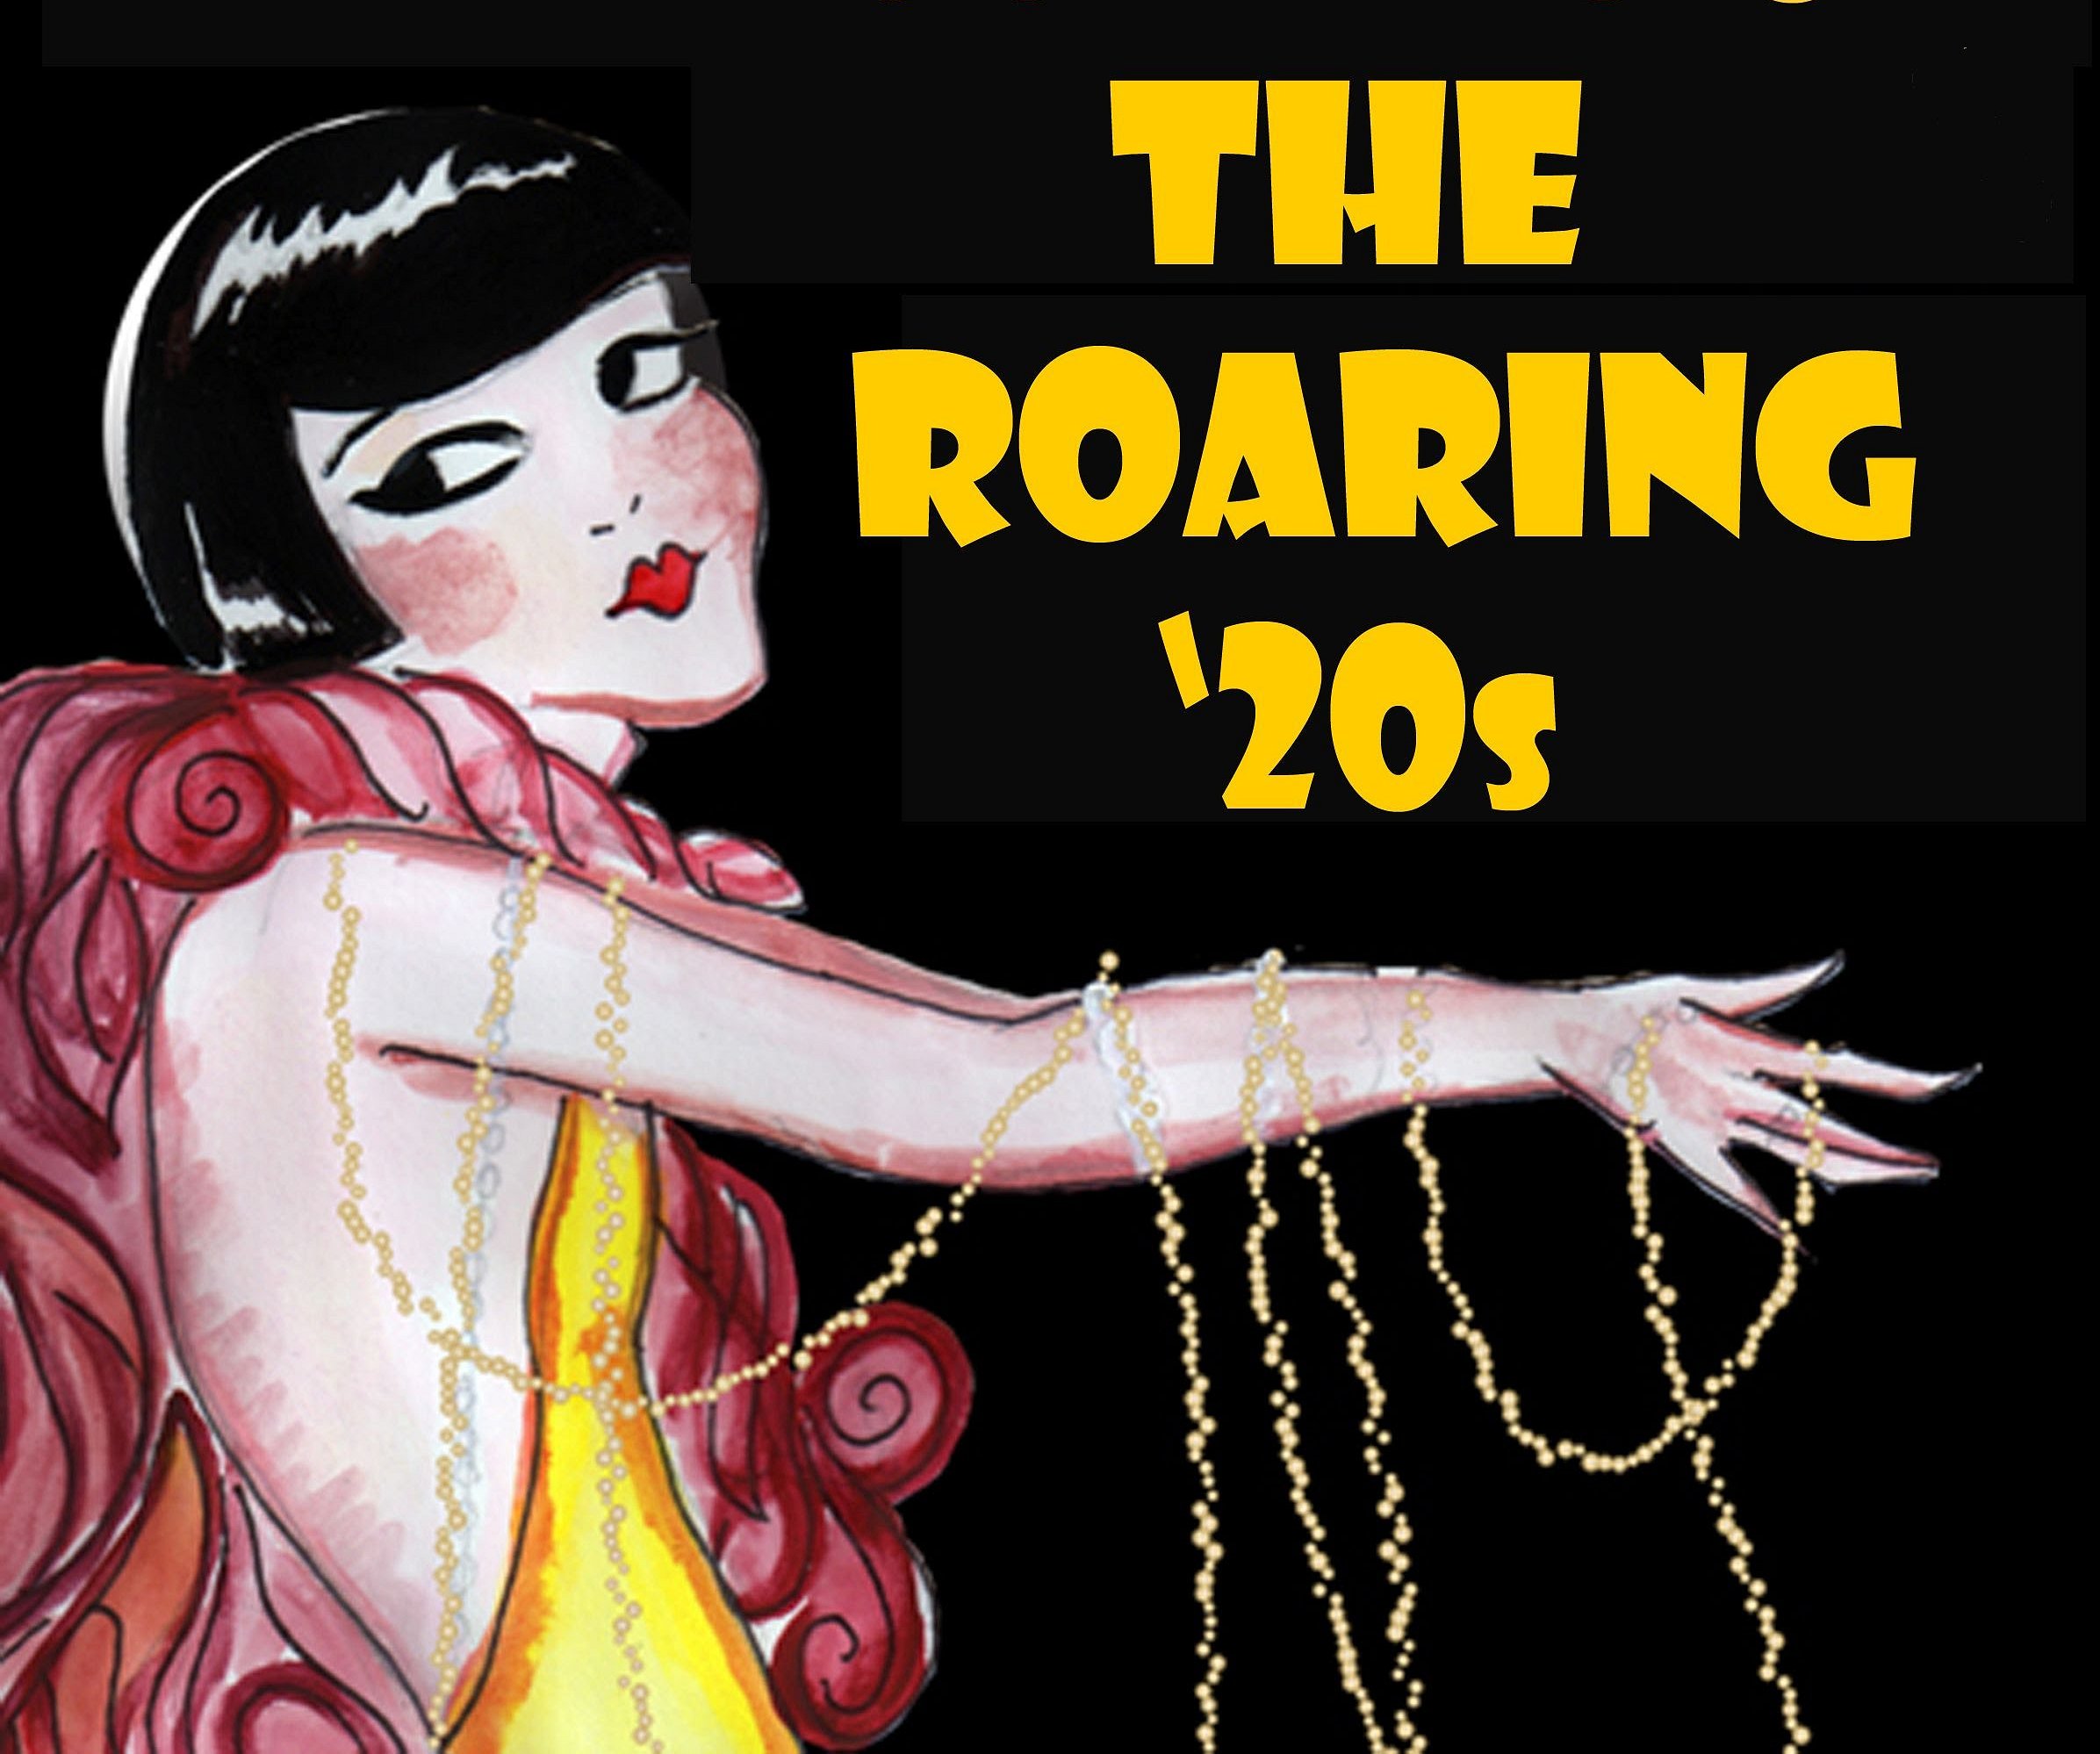 The Roaring Twenties Google image adapted from https://i.ytimg.com/vi/z3qxyHNA5Cs/maxresdefault.jpg